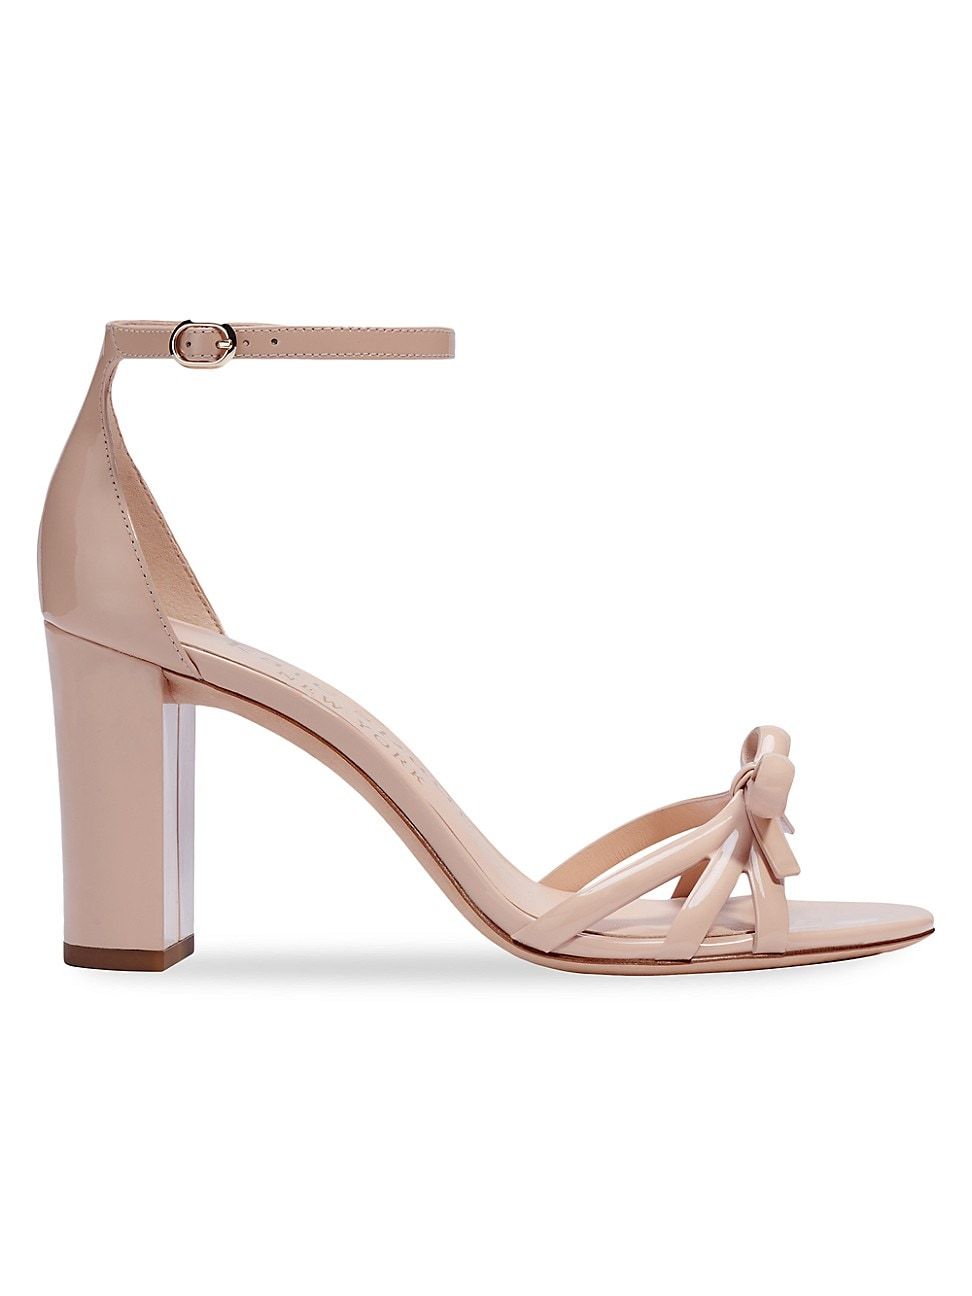 Kate Spade New York Women's Flamenco Bow Ankle-Strap Sandals - Peach Shak - Size 6.5 | Saks Fifth Avenue